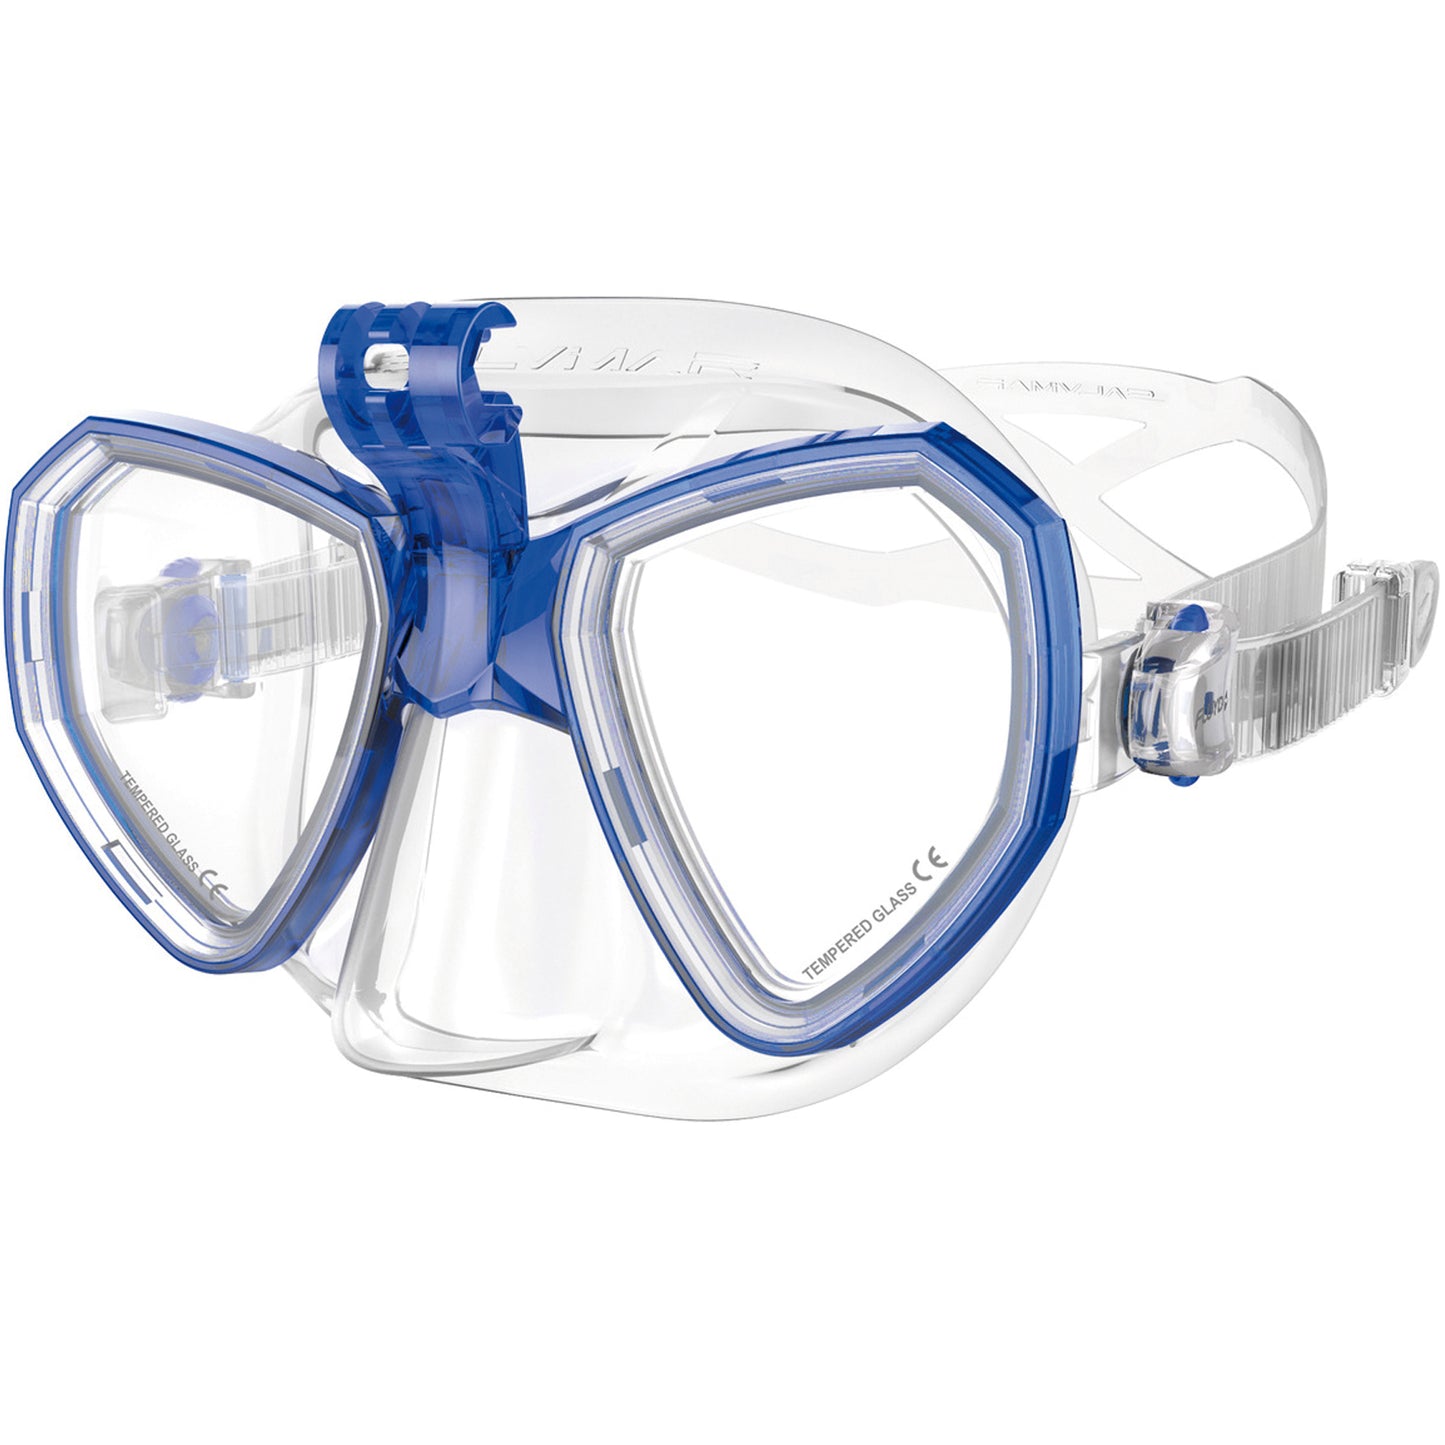 Salvimar Trinity diving mask